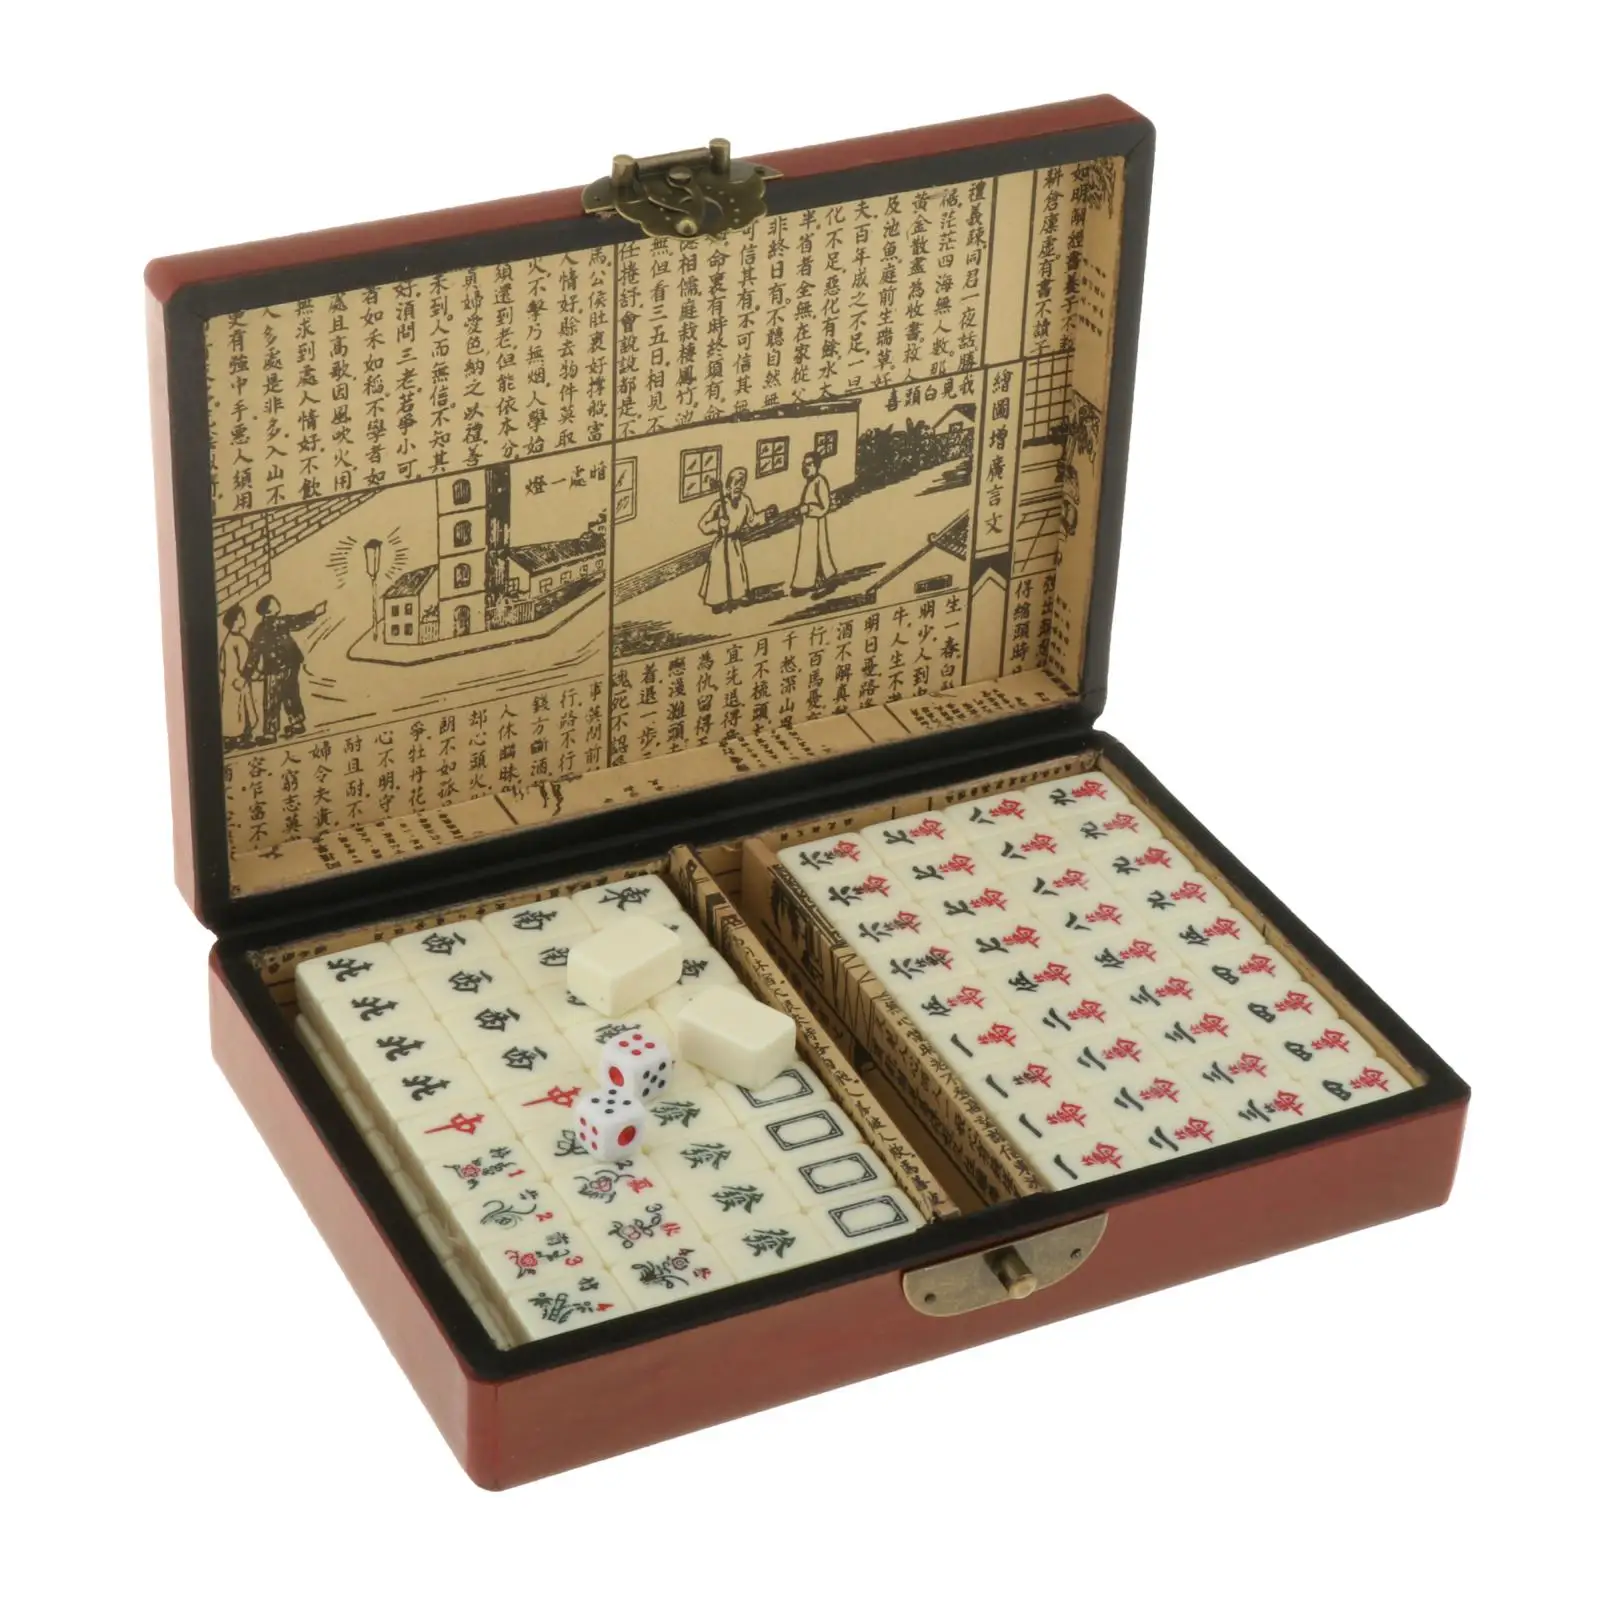 DatingDay Mahjong Set,Chinese Mahjong Mah Jongg Game Set,Contains 144 Mahjong Cards,with Dice and Wooden Box,Acrylic Material Mah-jongg Travel Family Leisure Time 